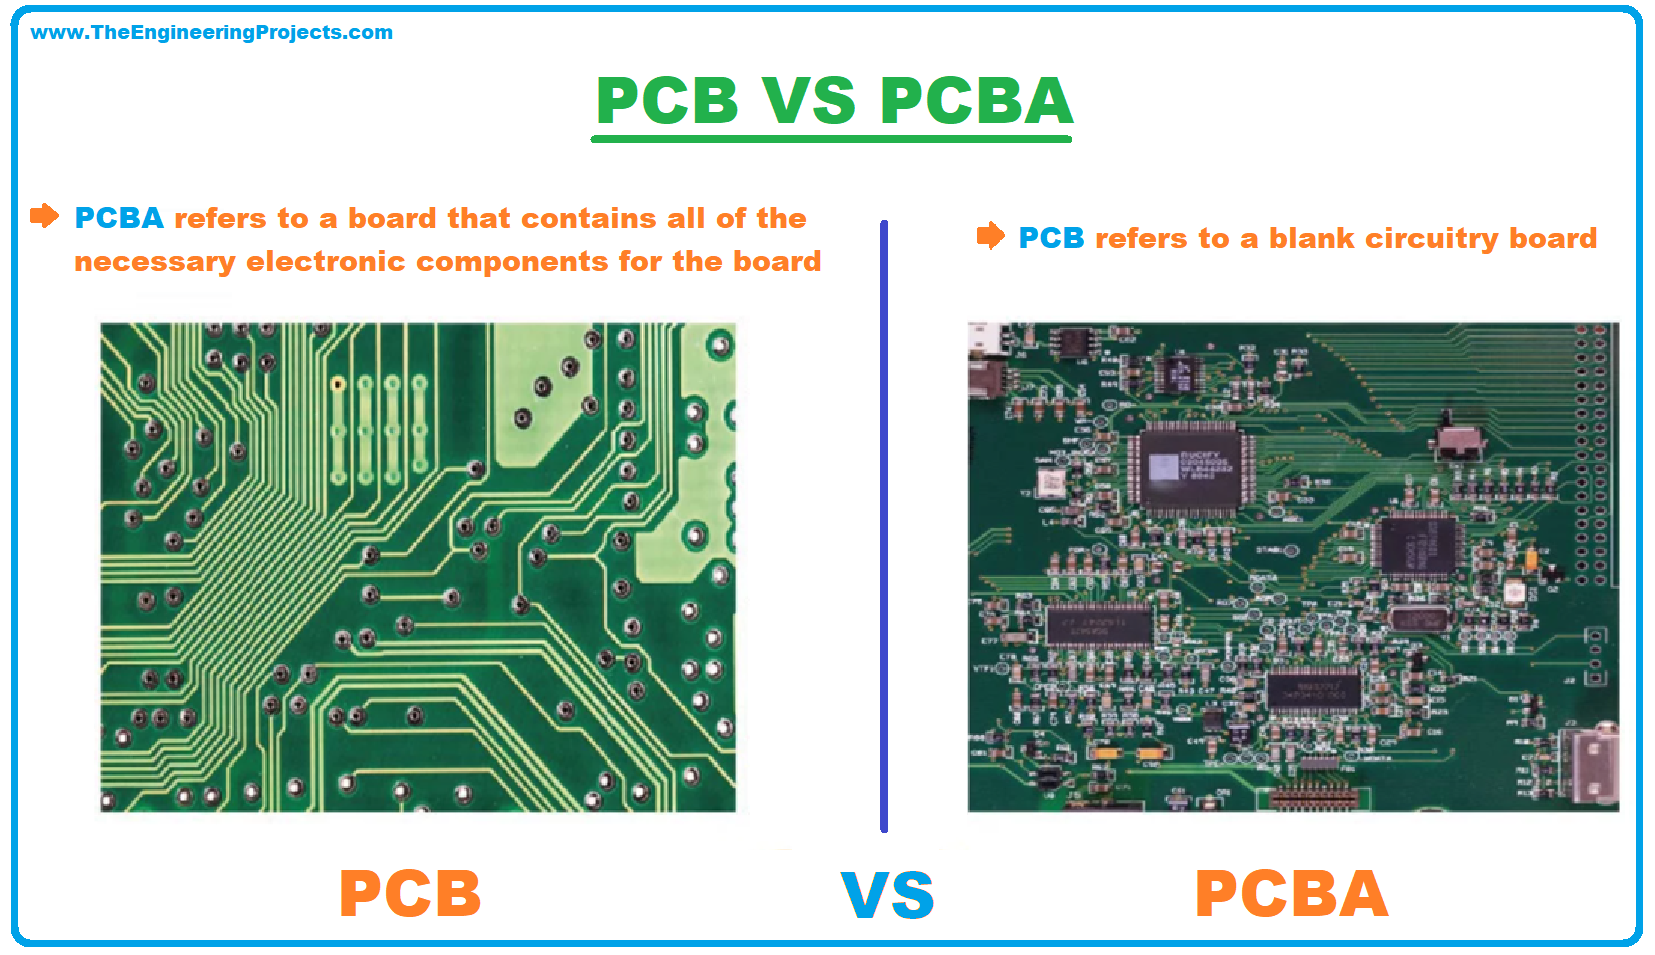 PCBA, PCBA Definition, PCBA Types, PCBA Manufacturing Process, Price & Applications of PCBA